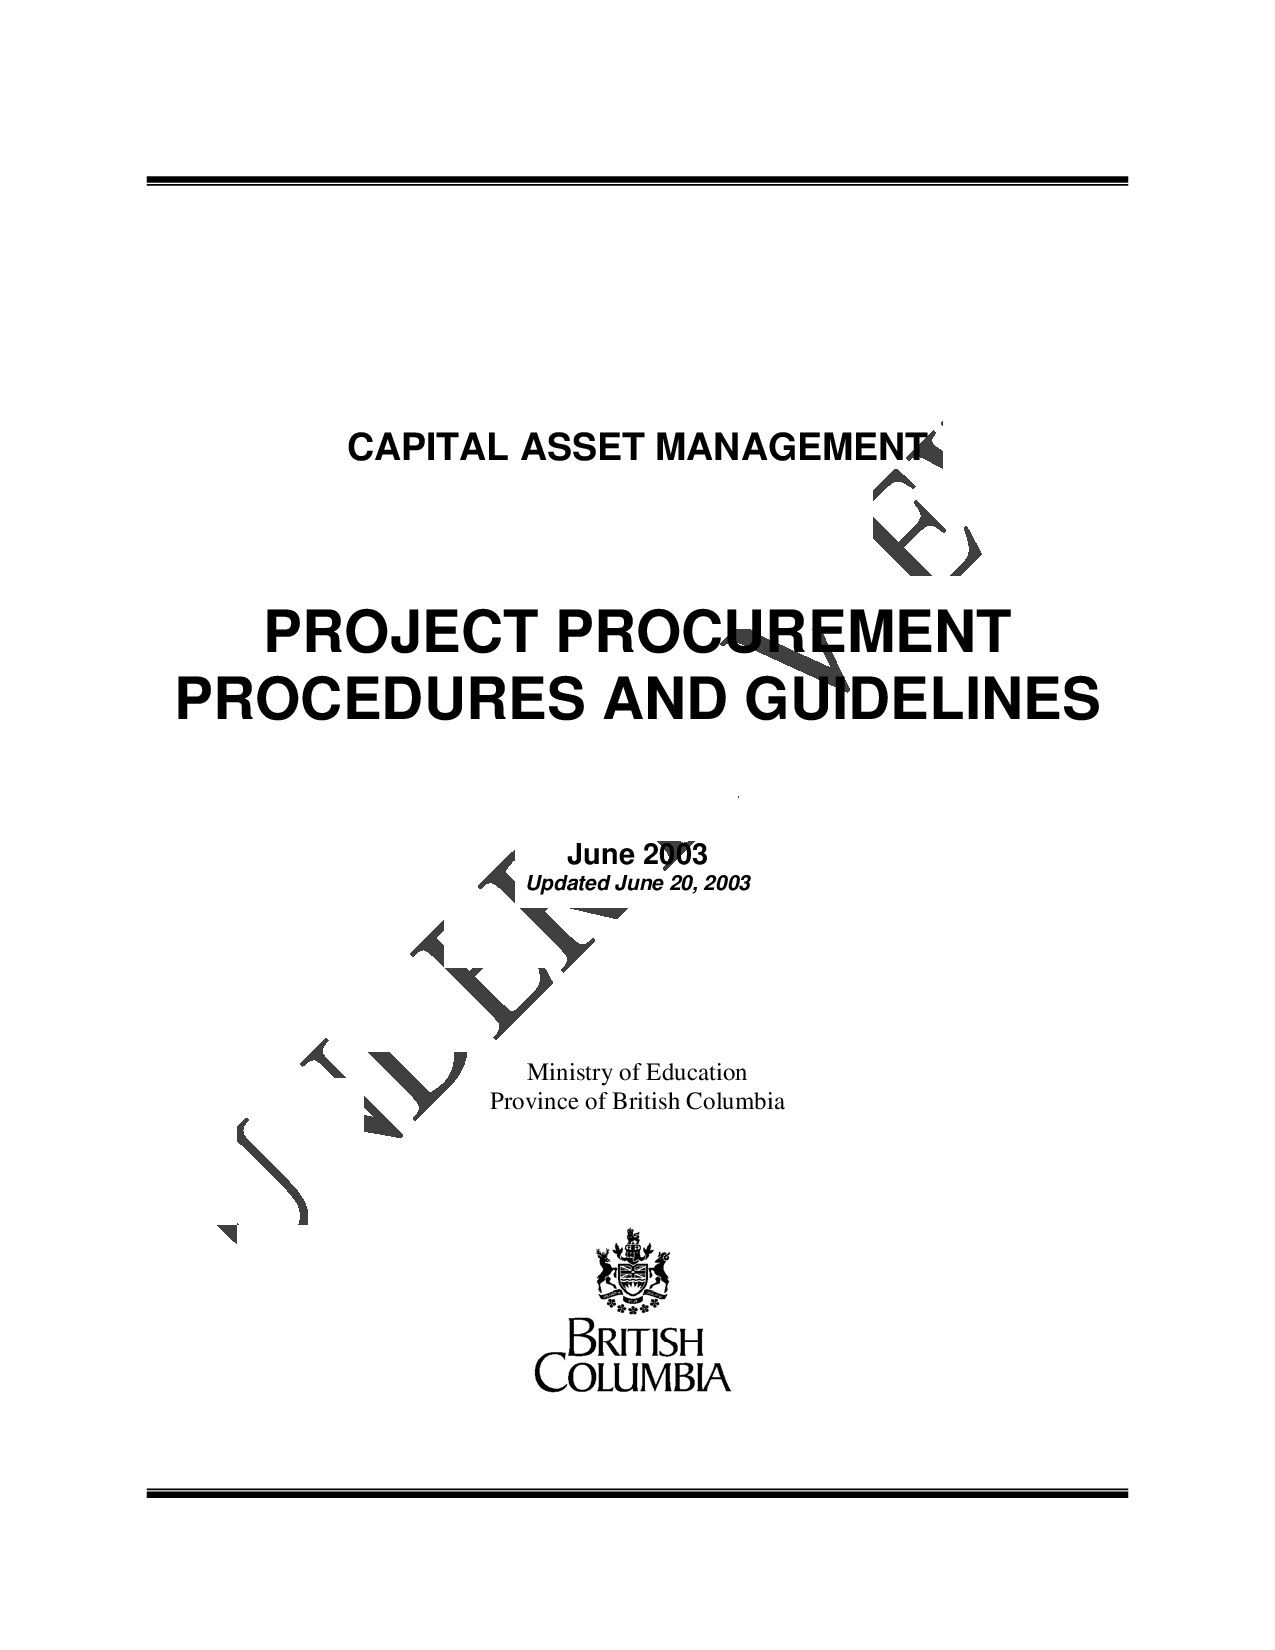 Under Review - Capital Asset Management - Project Procurement Procedures and Guidelines